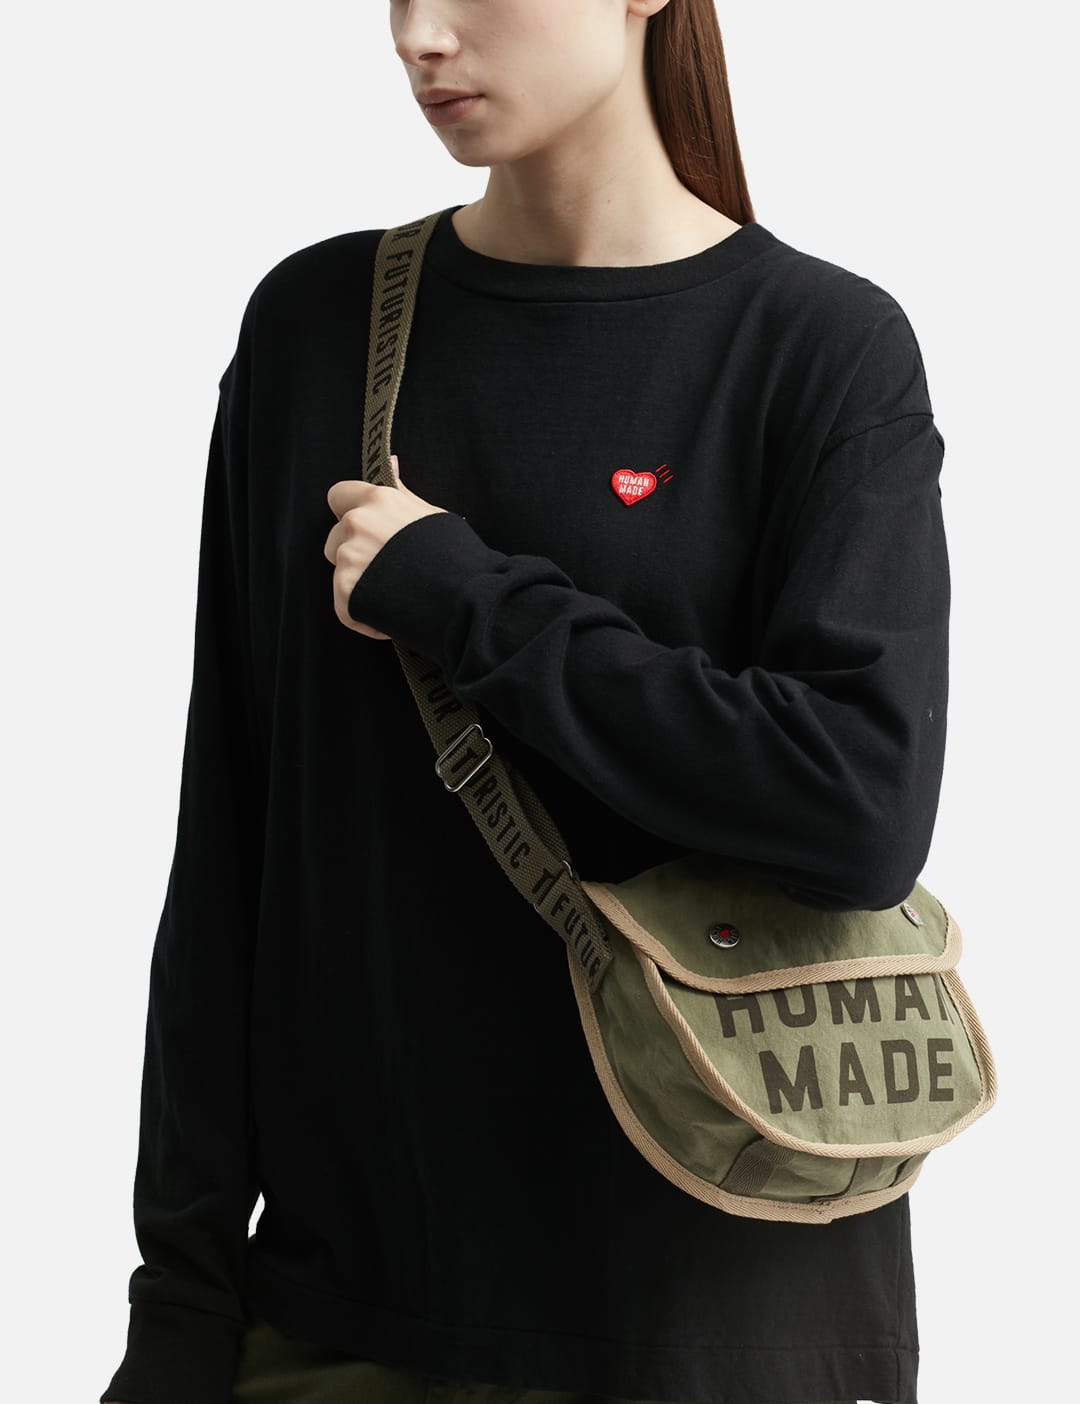 Human Made - Small Tool Bag | HBX - HYPEBEAST 為您搜羅全球潮流時尚品牌